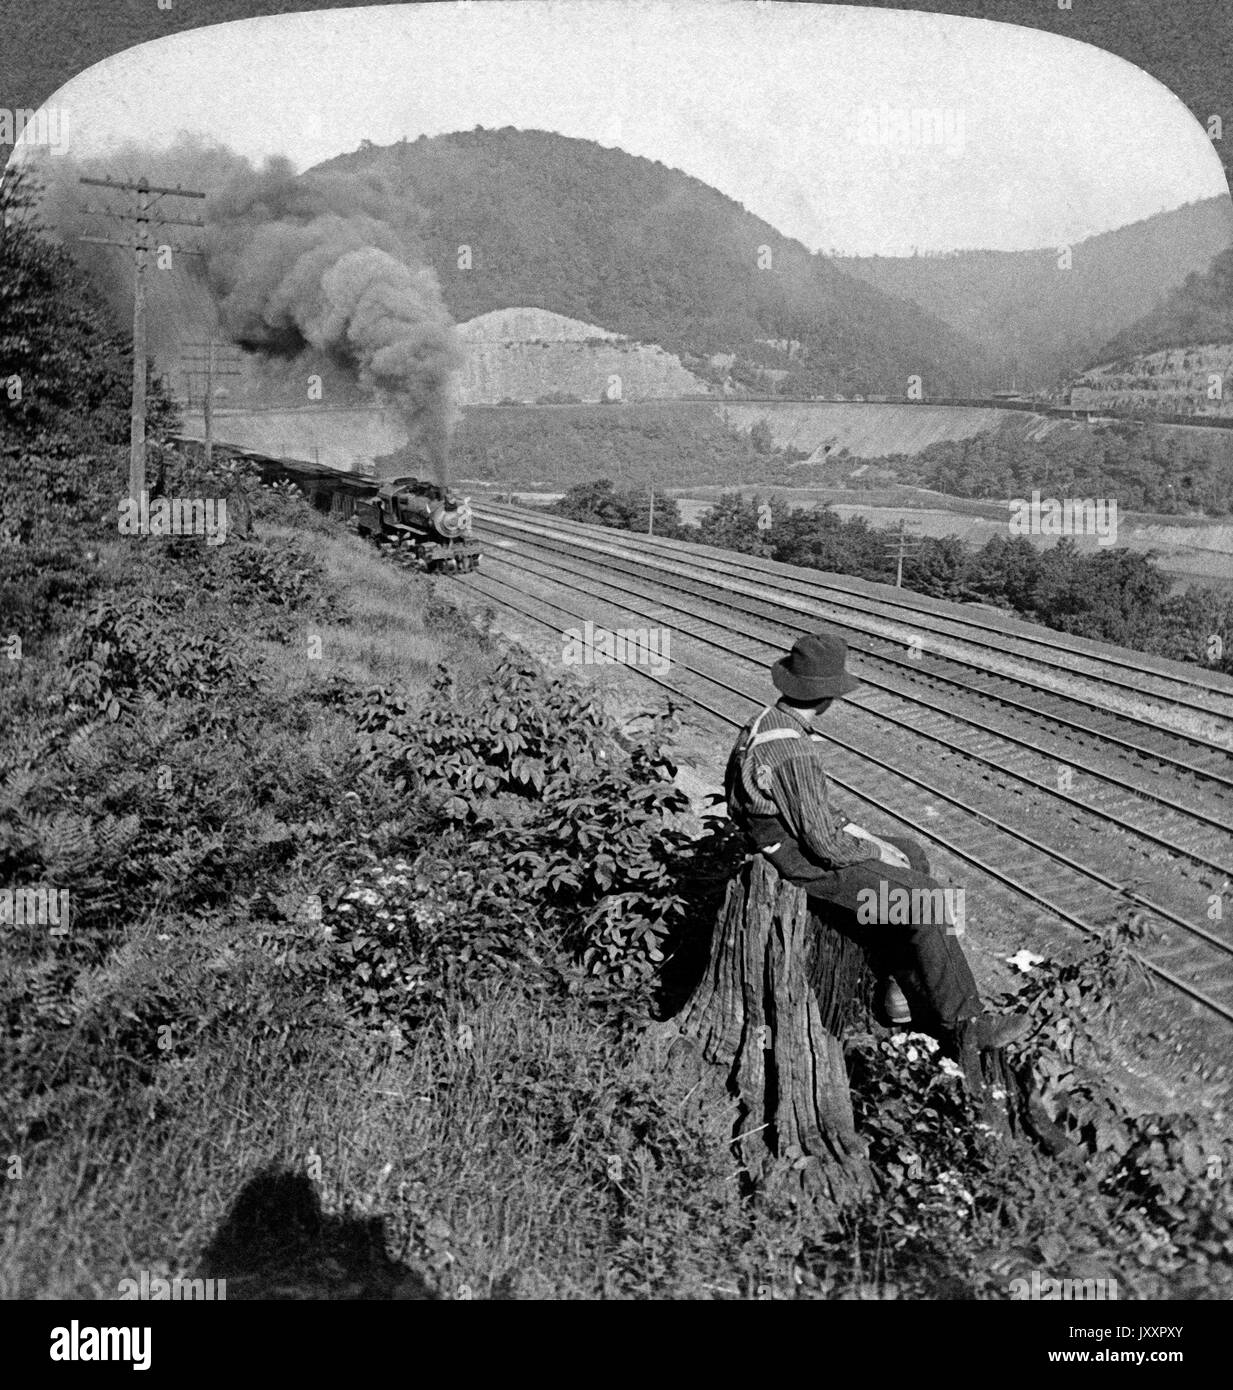 Berühmte Hufeisen Kurve in den Allegheny Mountains, West Virginia, USA, 1908. Berühmte Horseshoe Curve unter den Allegheny Mountains, West Virginia, USA 1908. Stockfoto